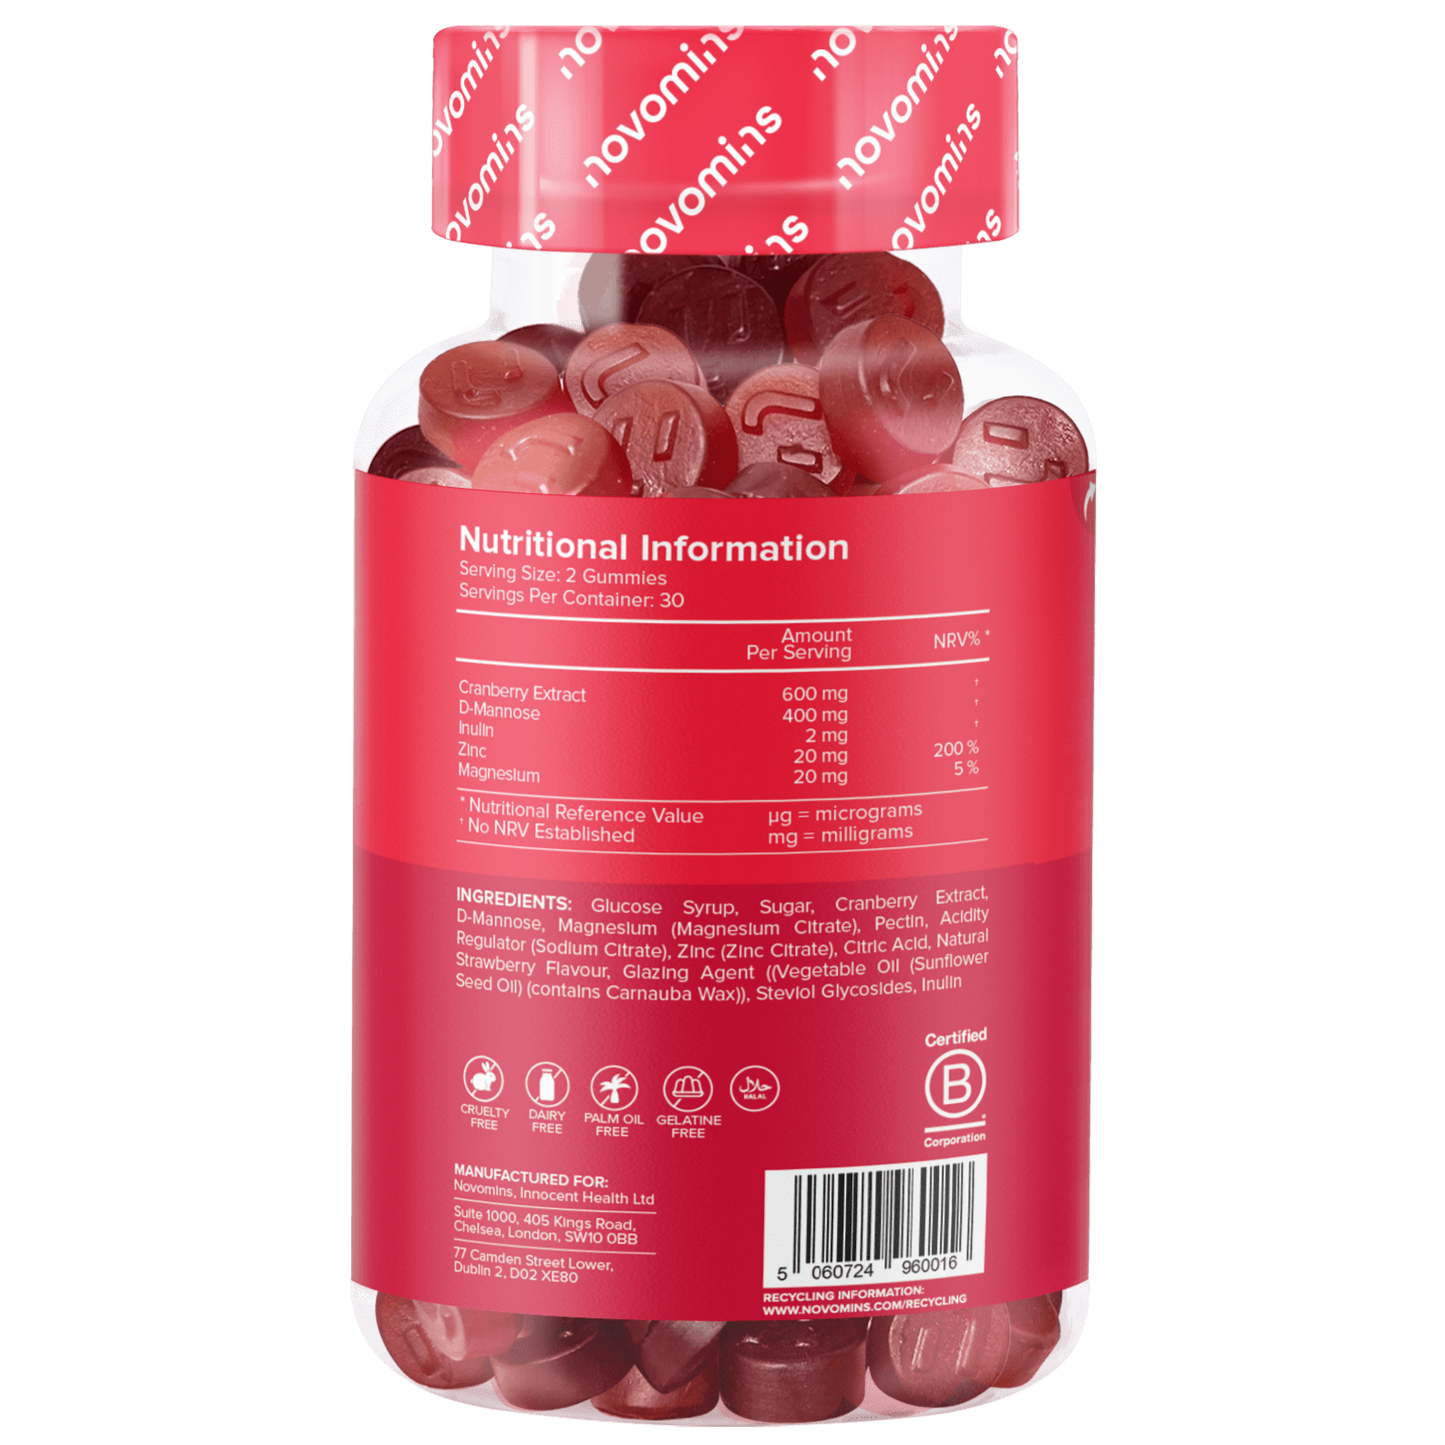 Cranberry & D Mannose Gummies